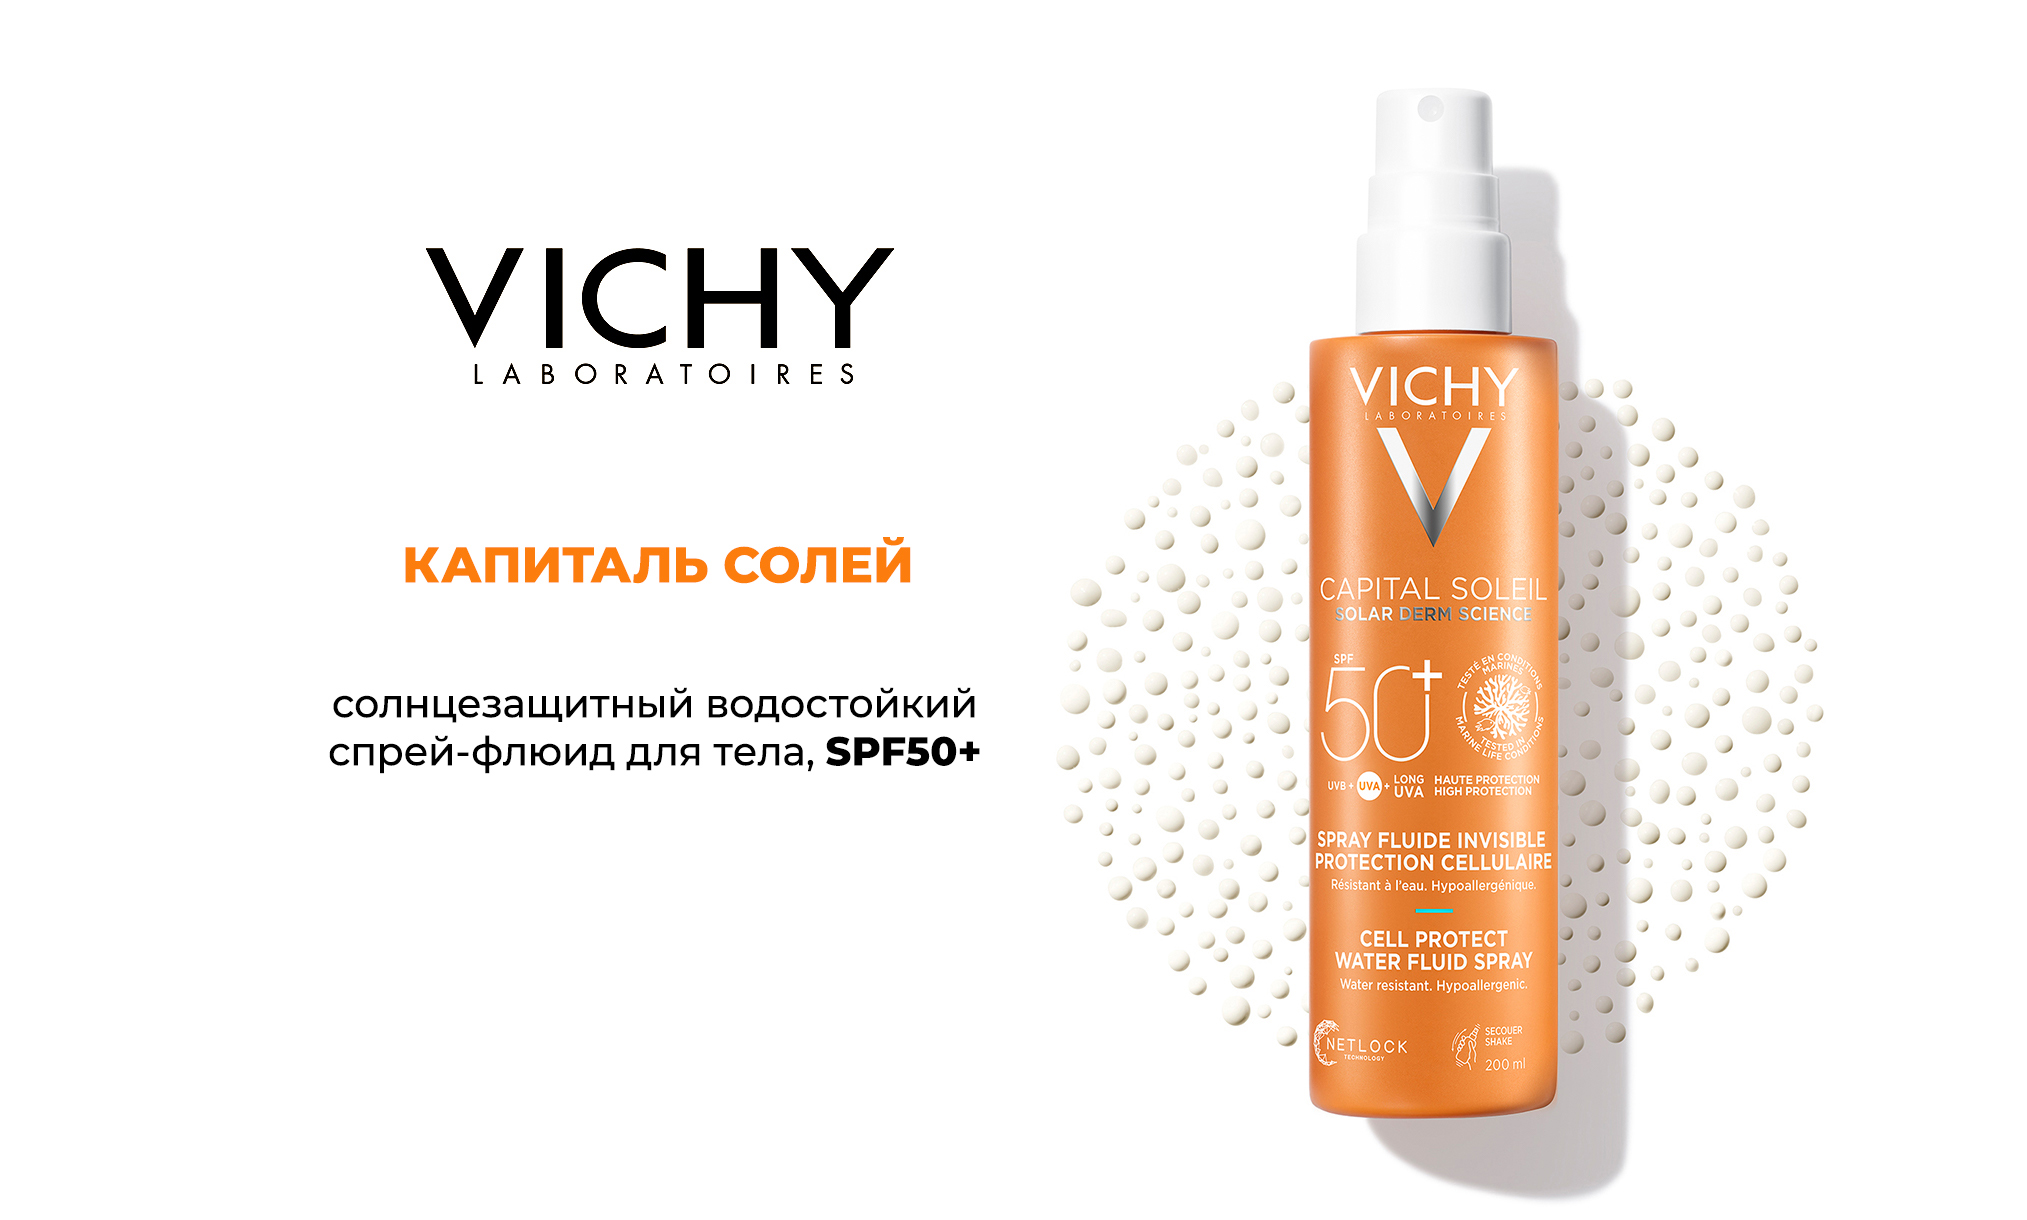 Vichy Capital Soleil Solar Derm Science SPF50+ Invisible Fluid Spray